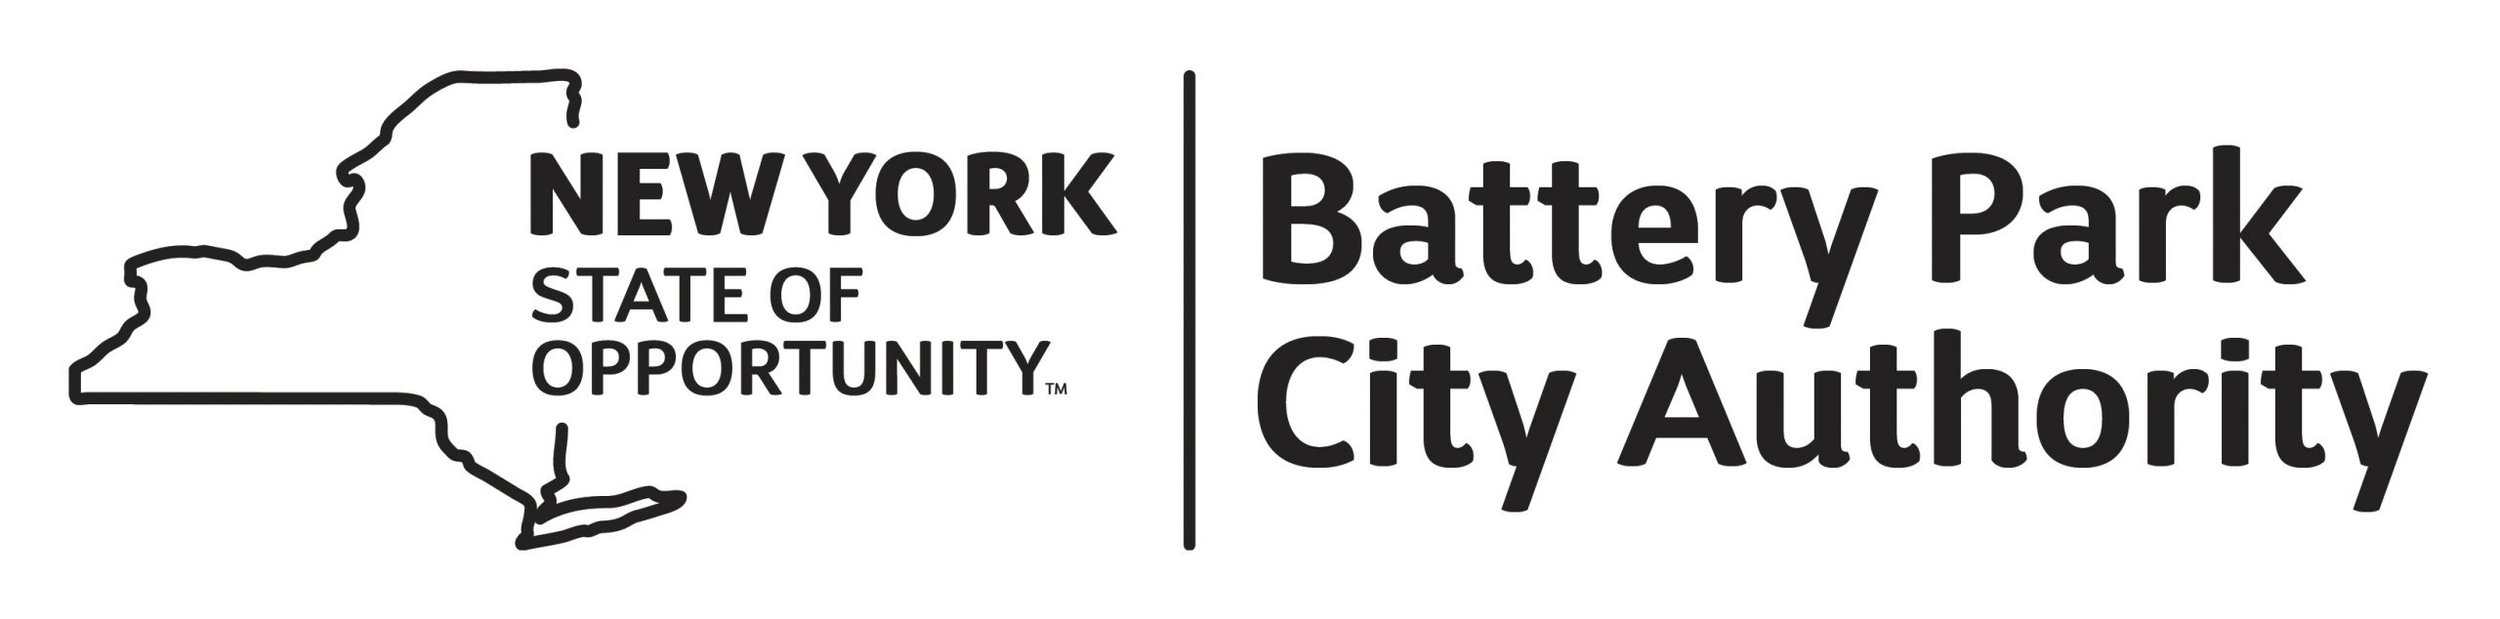 Battery-Park-Authority-BW-scaled.jpg